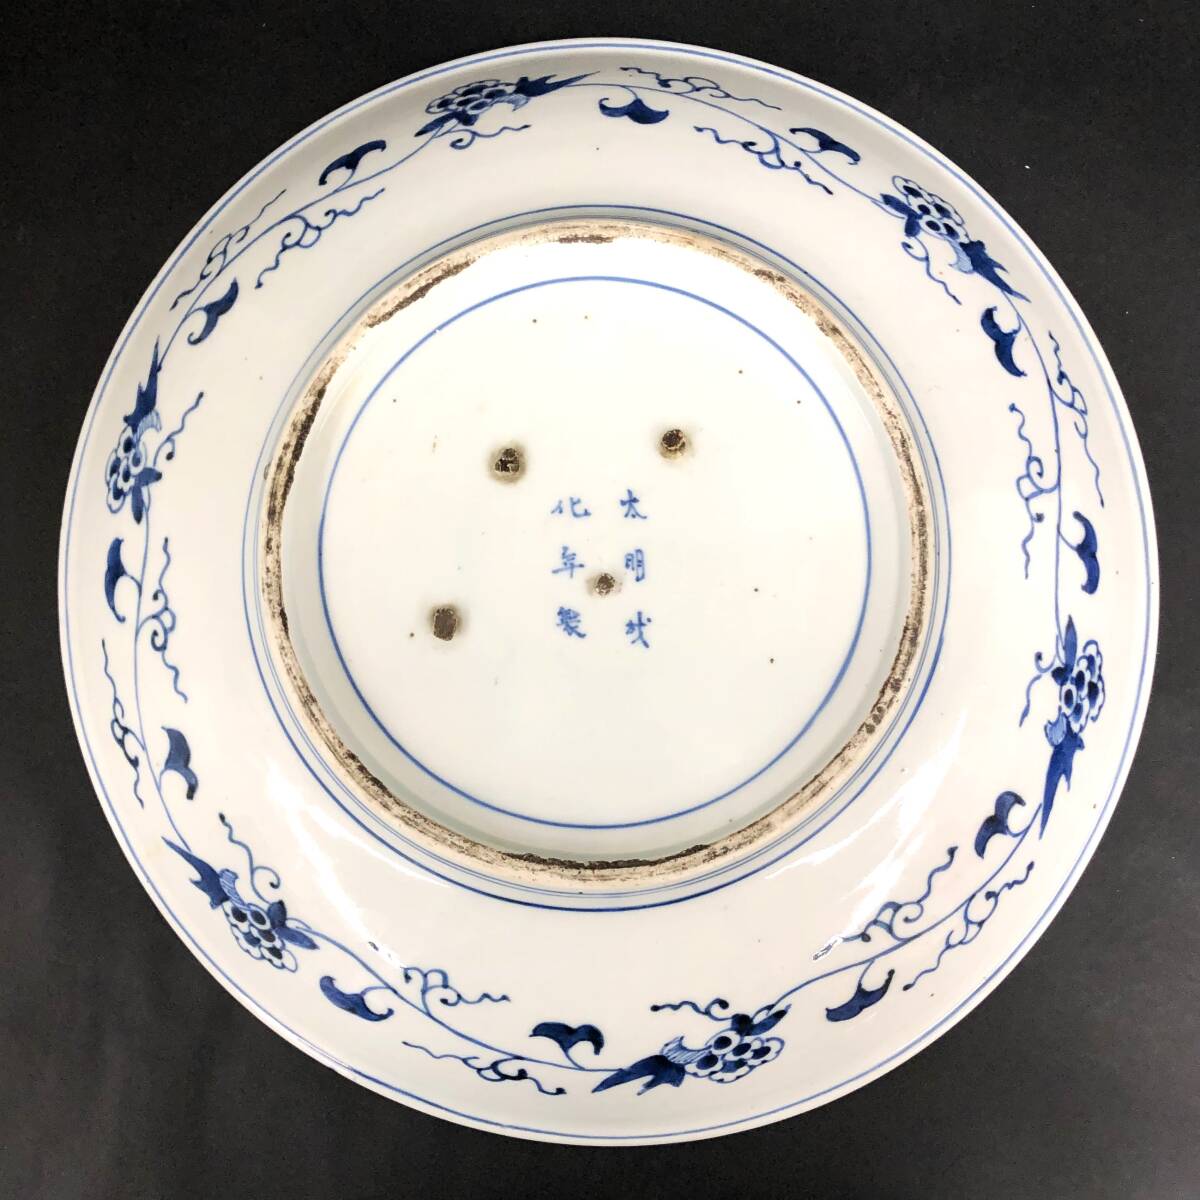  old Imari plum flower ice .. blue and white ceramics large plate futoshi Akira .. year made diameter approximately 40.5cm *424